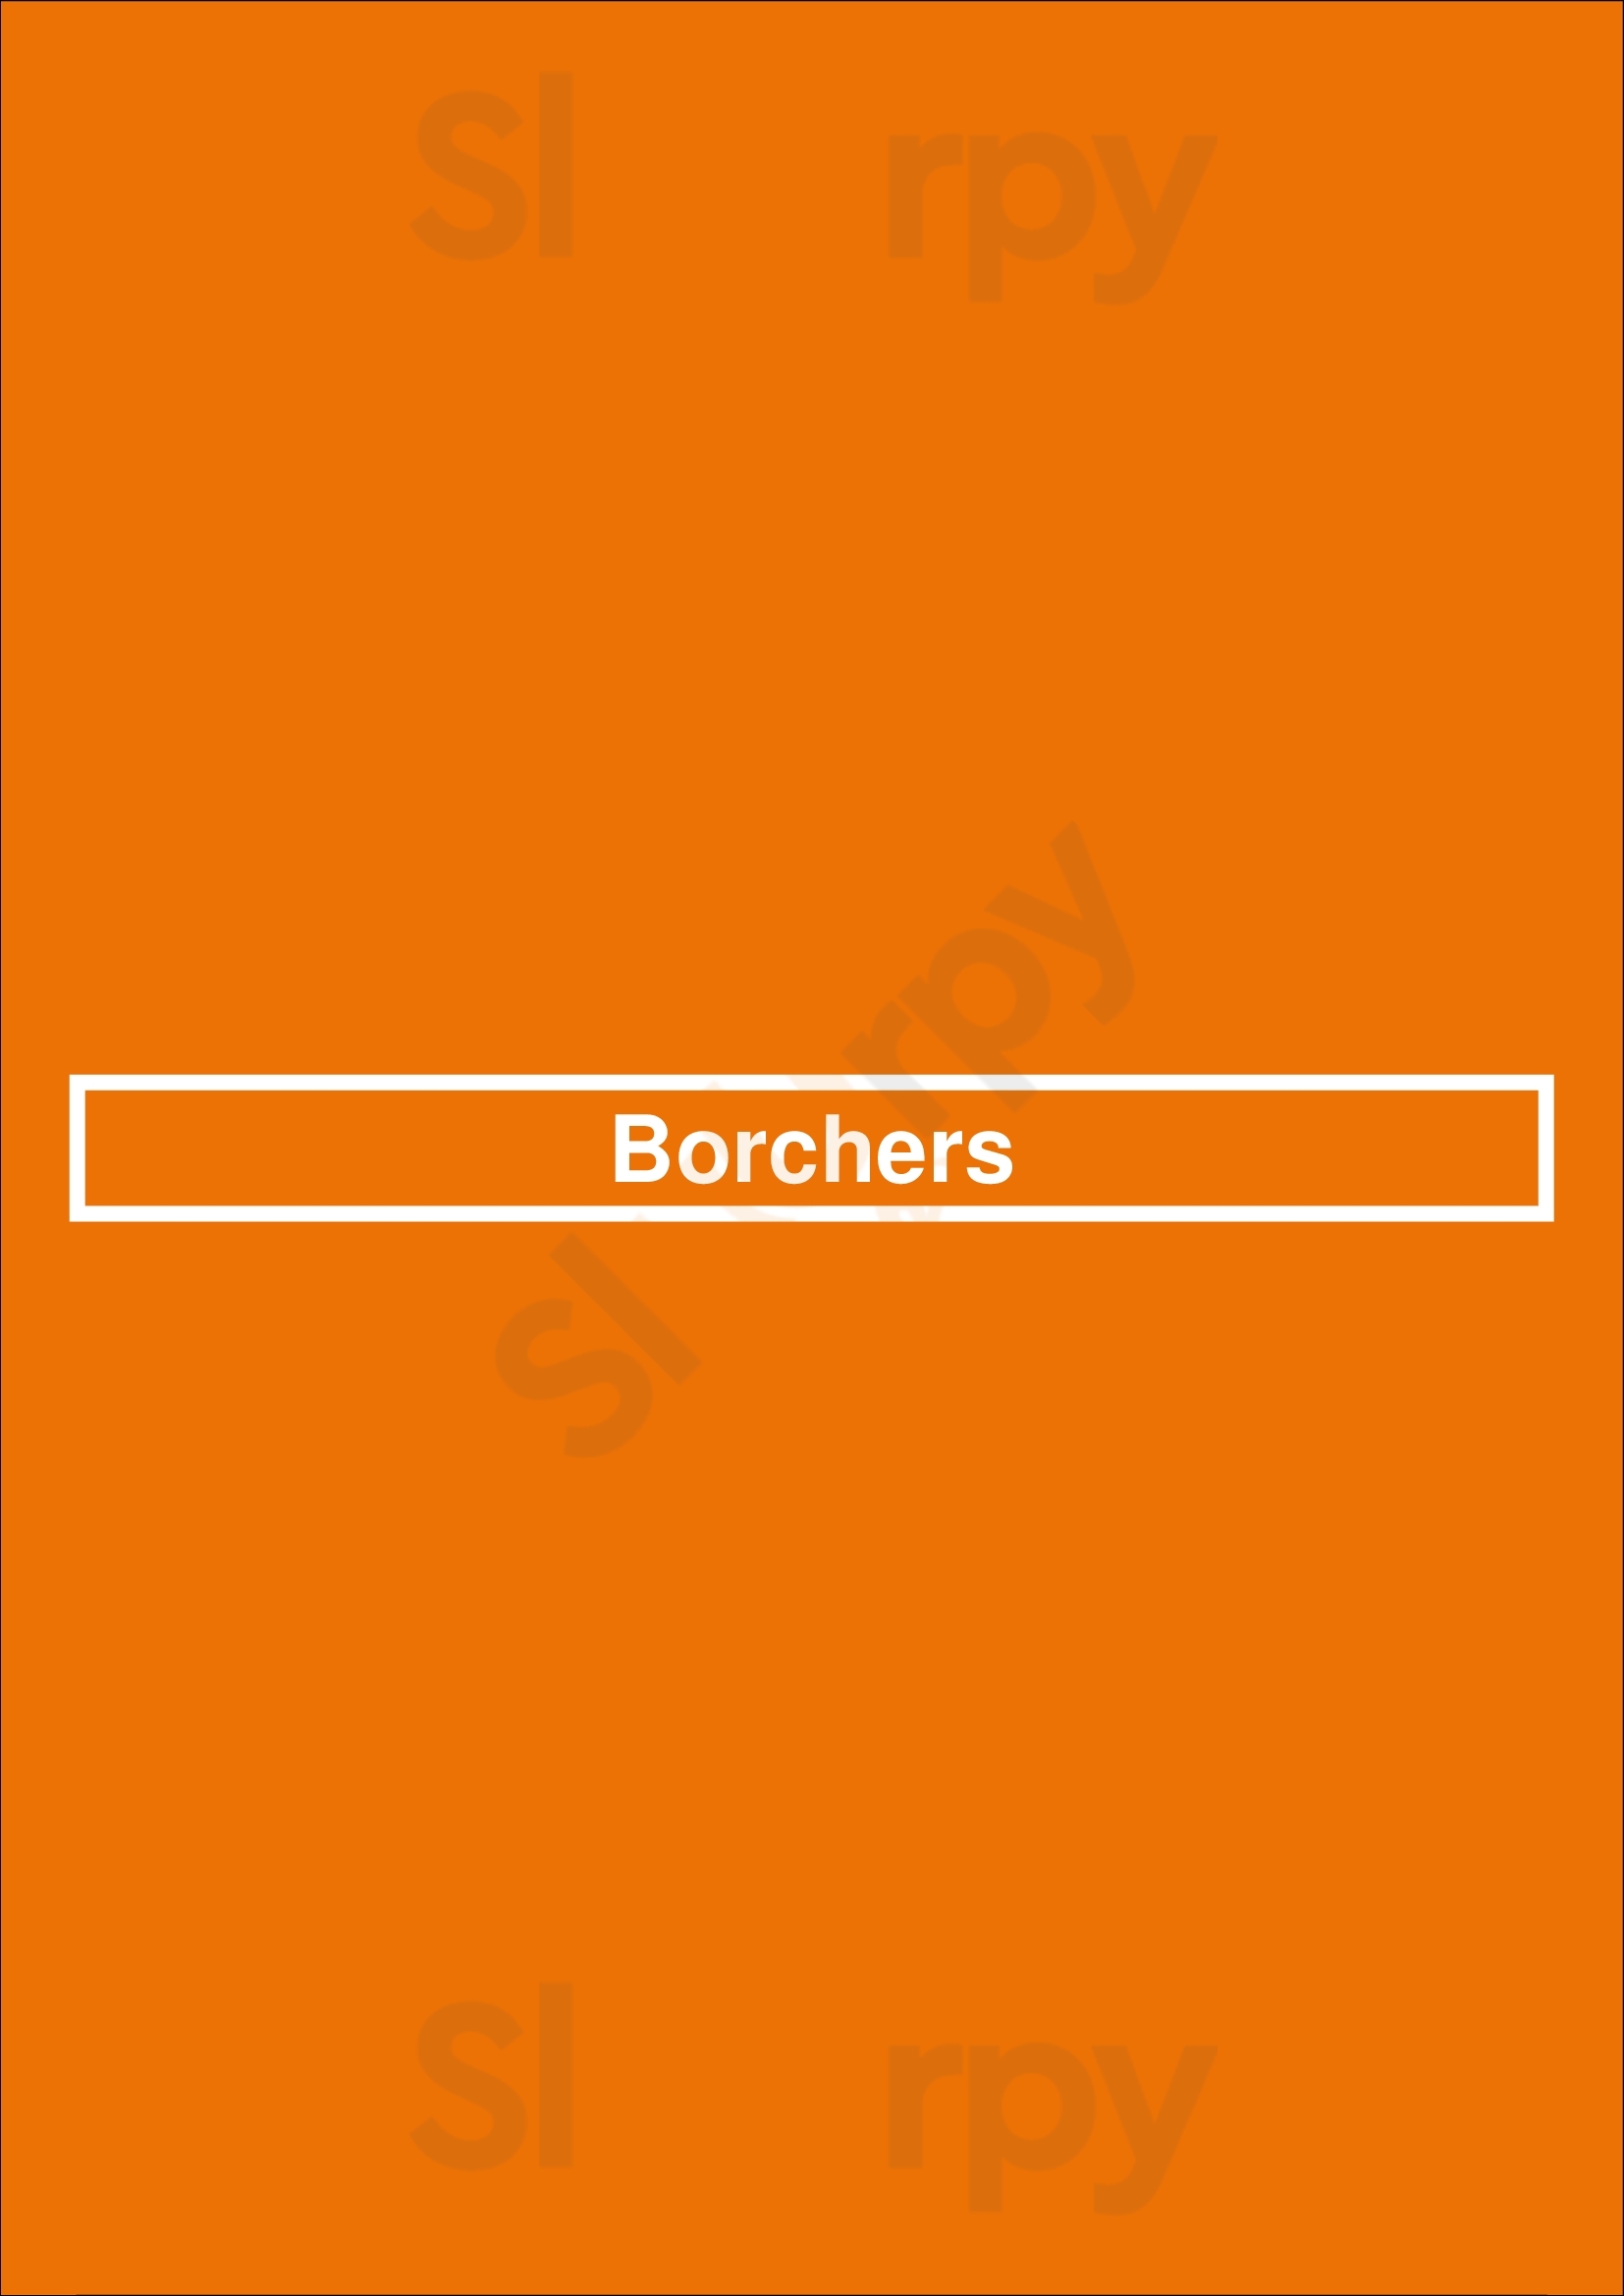 Borchers Hamburg Menu - 1